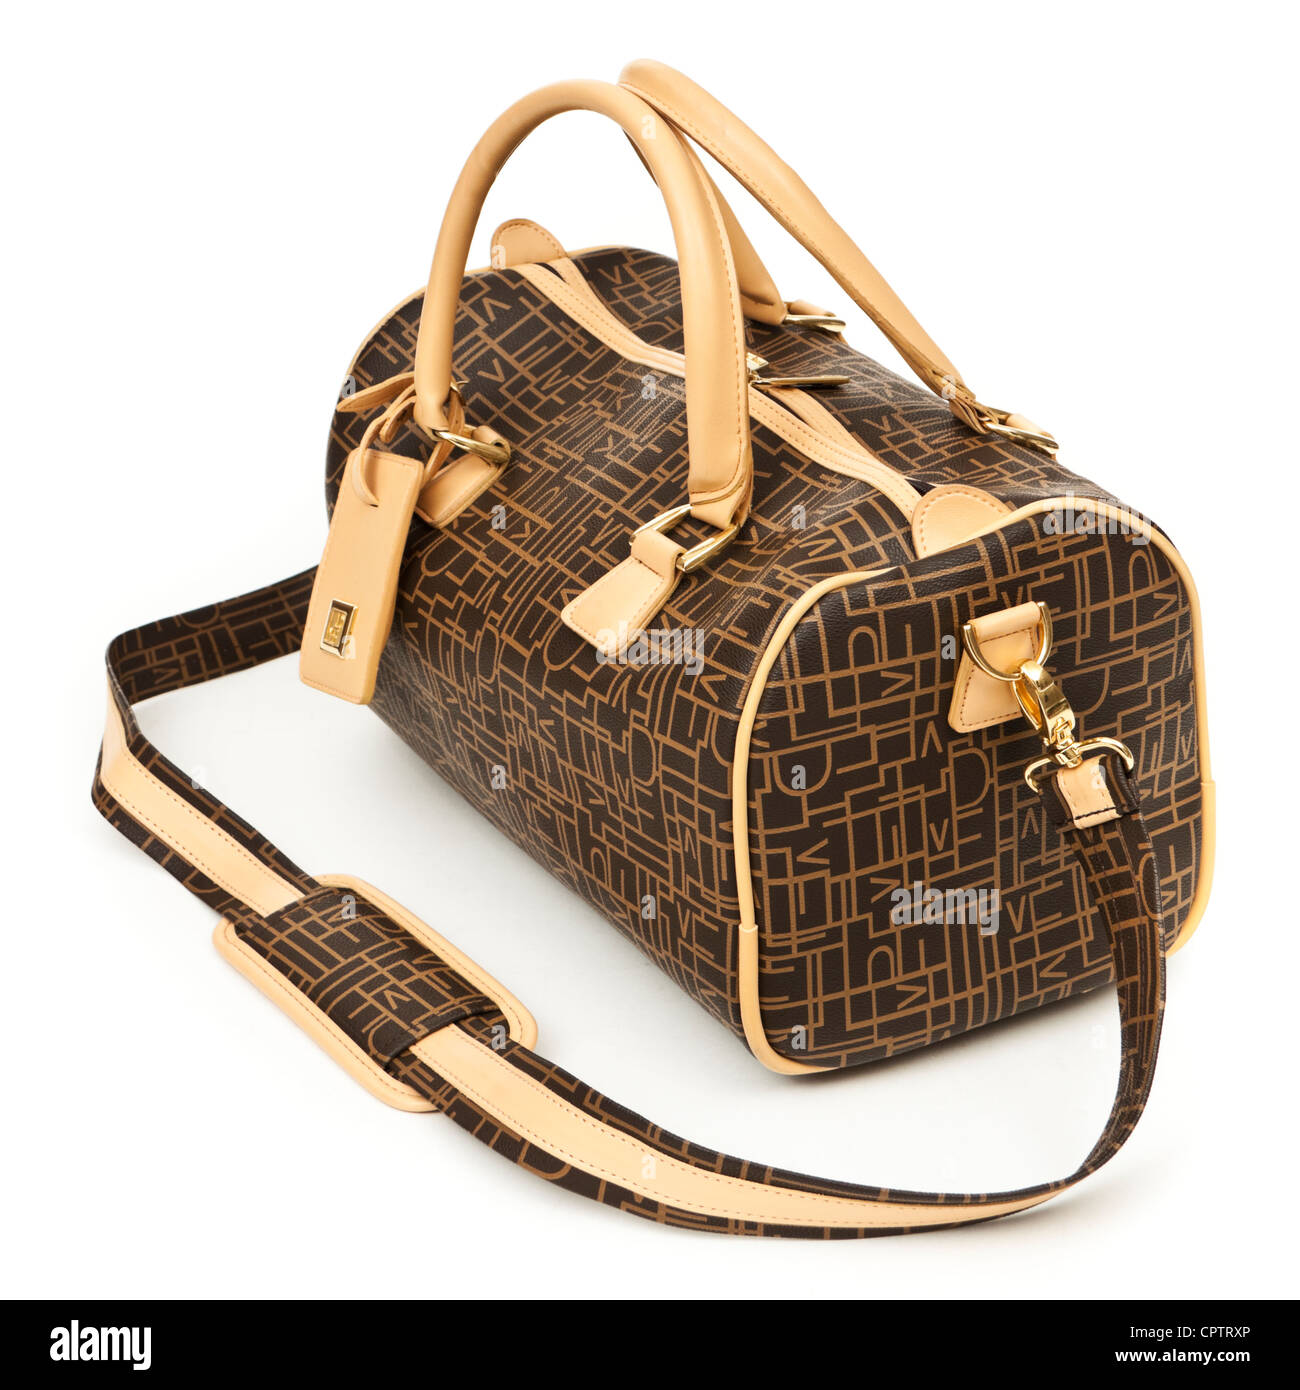 Diane von Furstenberg designer travel bag / luggage Stock Photo - Alamy